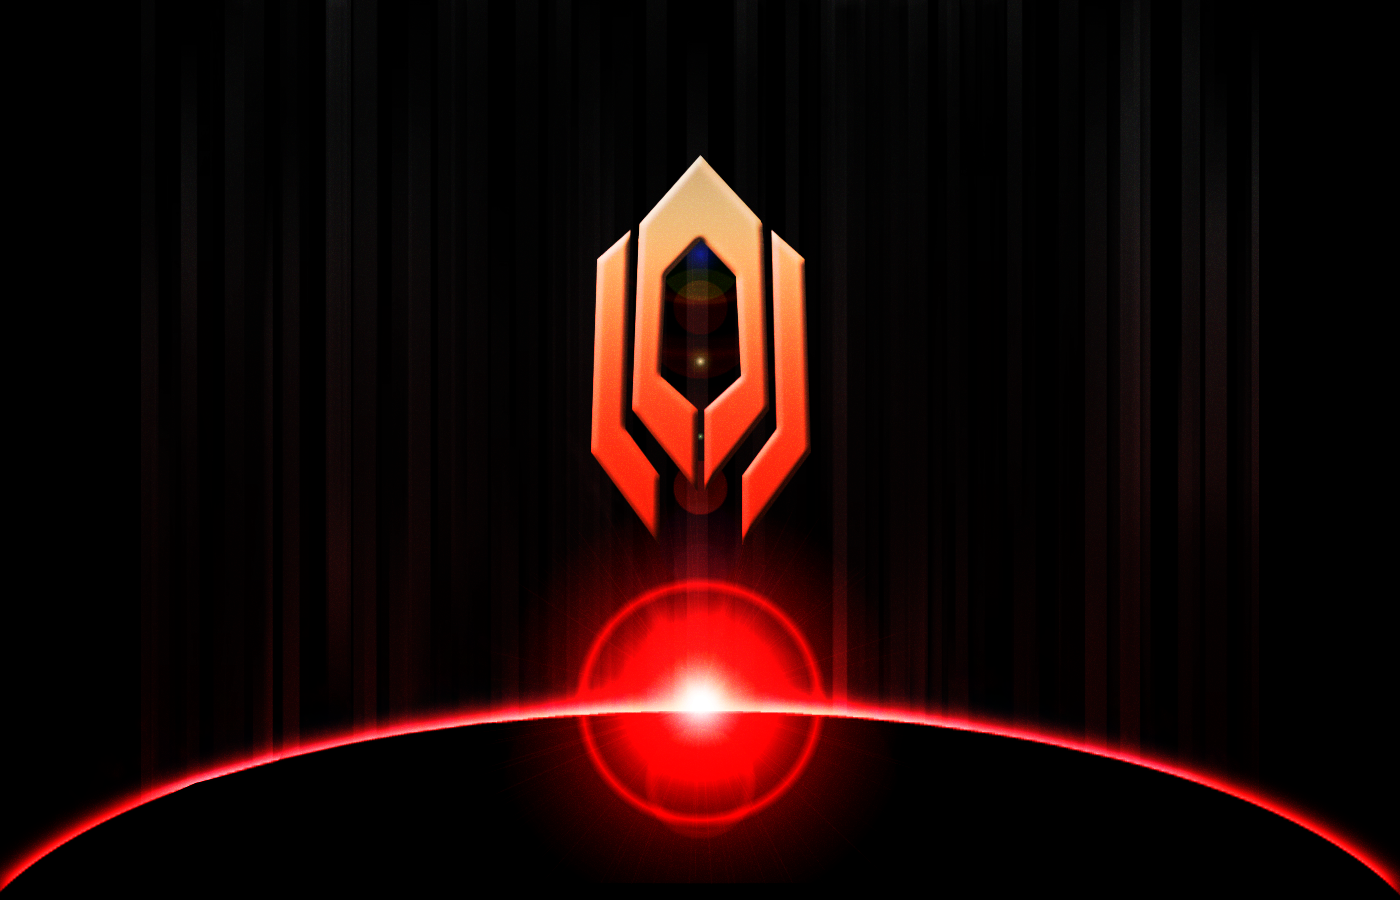 Mass_Effect_Wallpaper_Cerberus_by_RayzorFlash.png